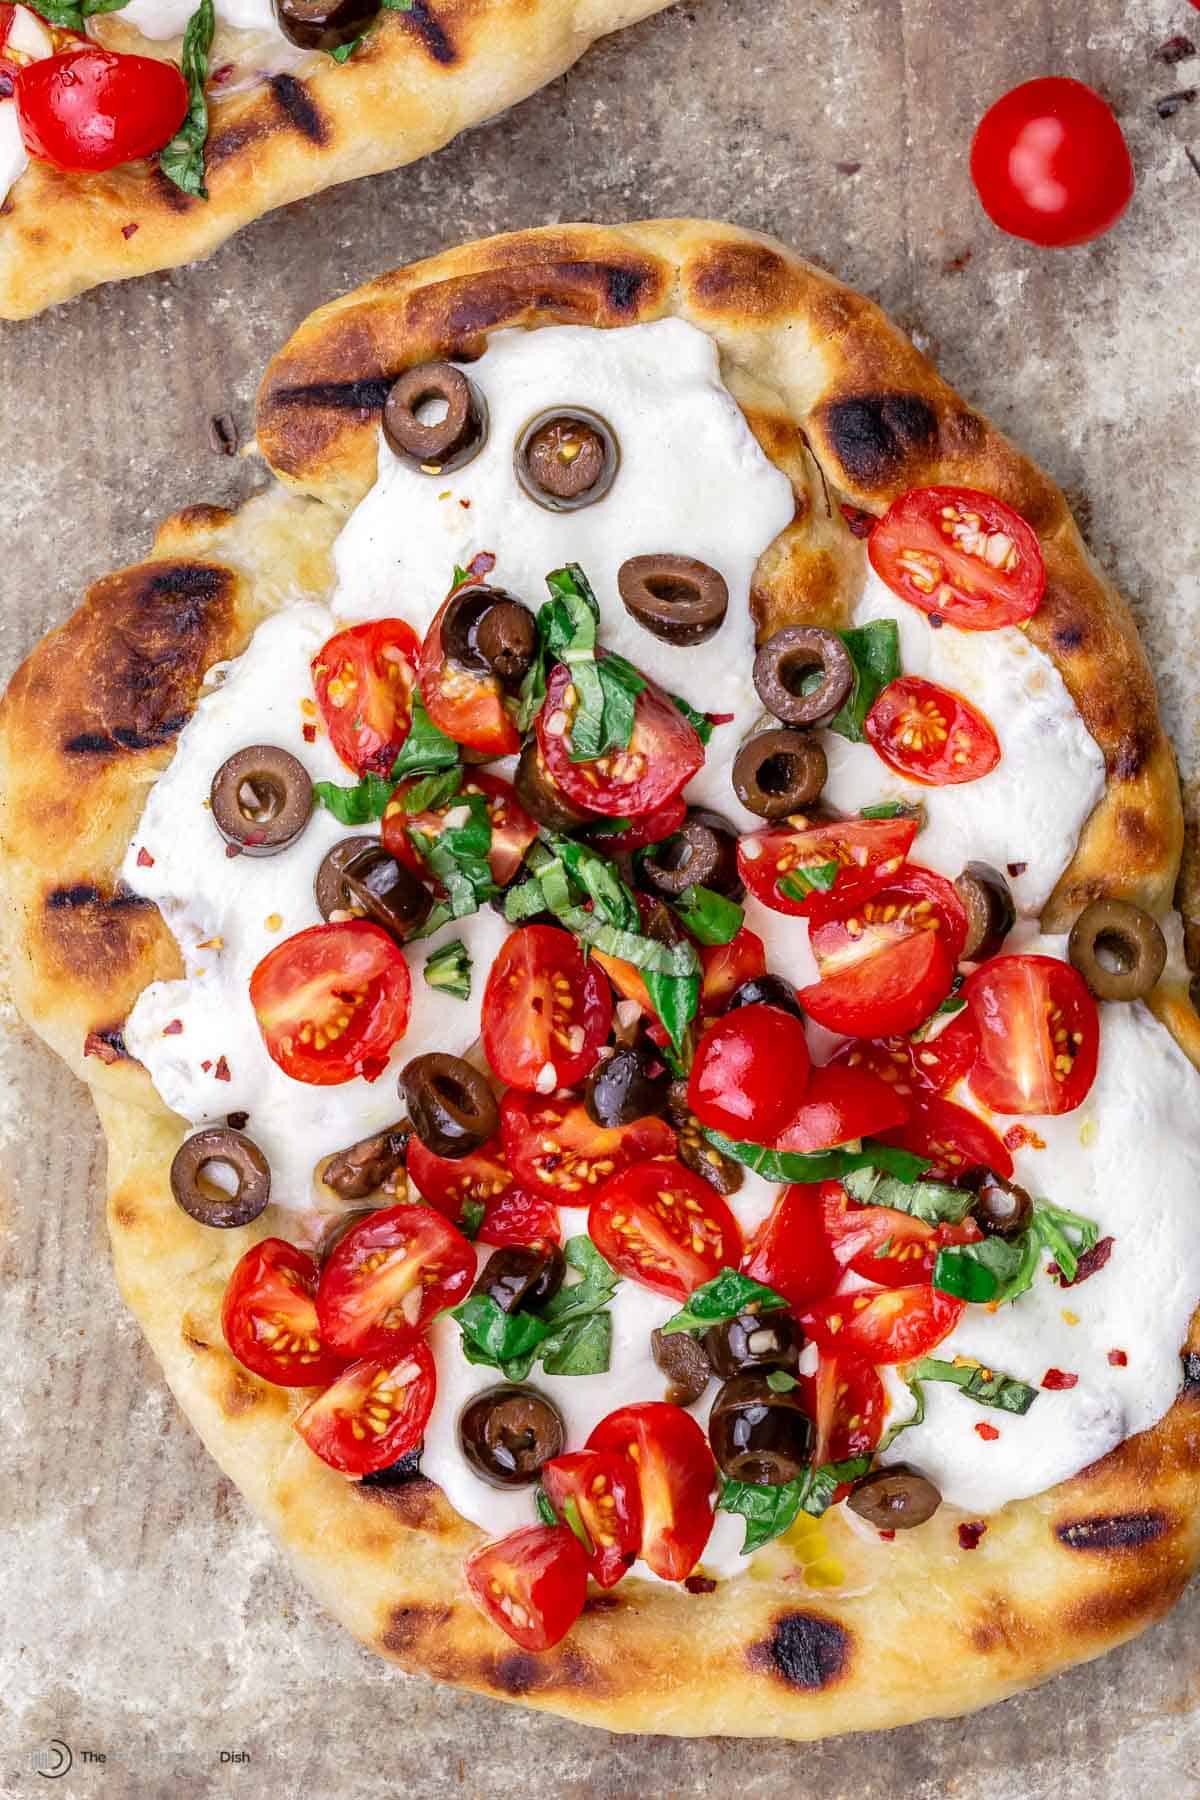 Fresh Hot Pizza - 1 tip